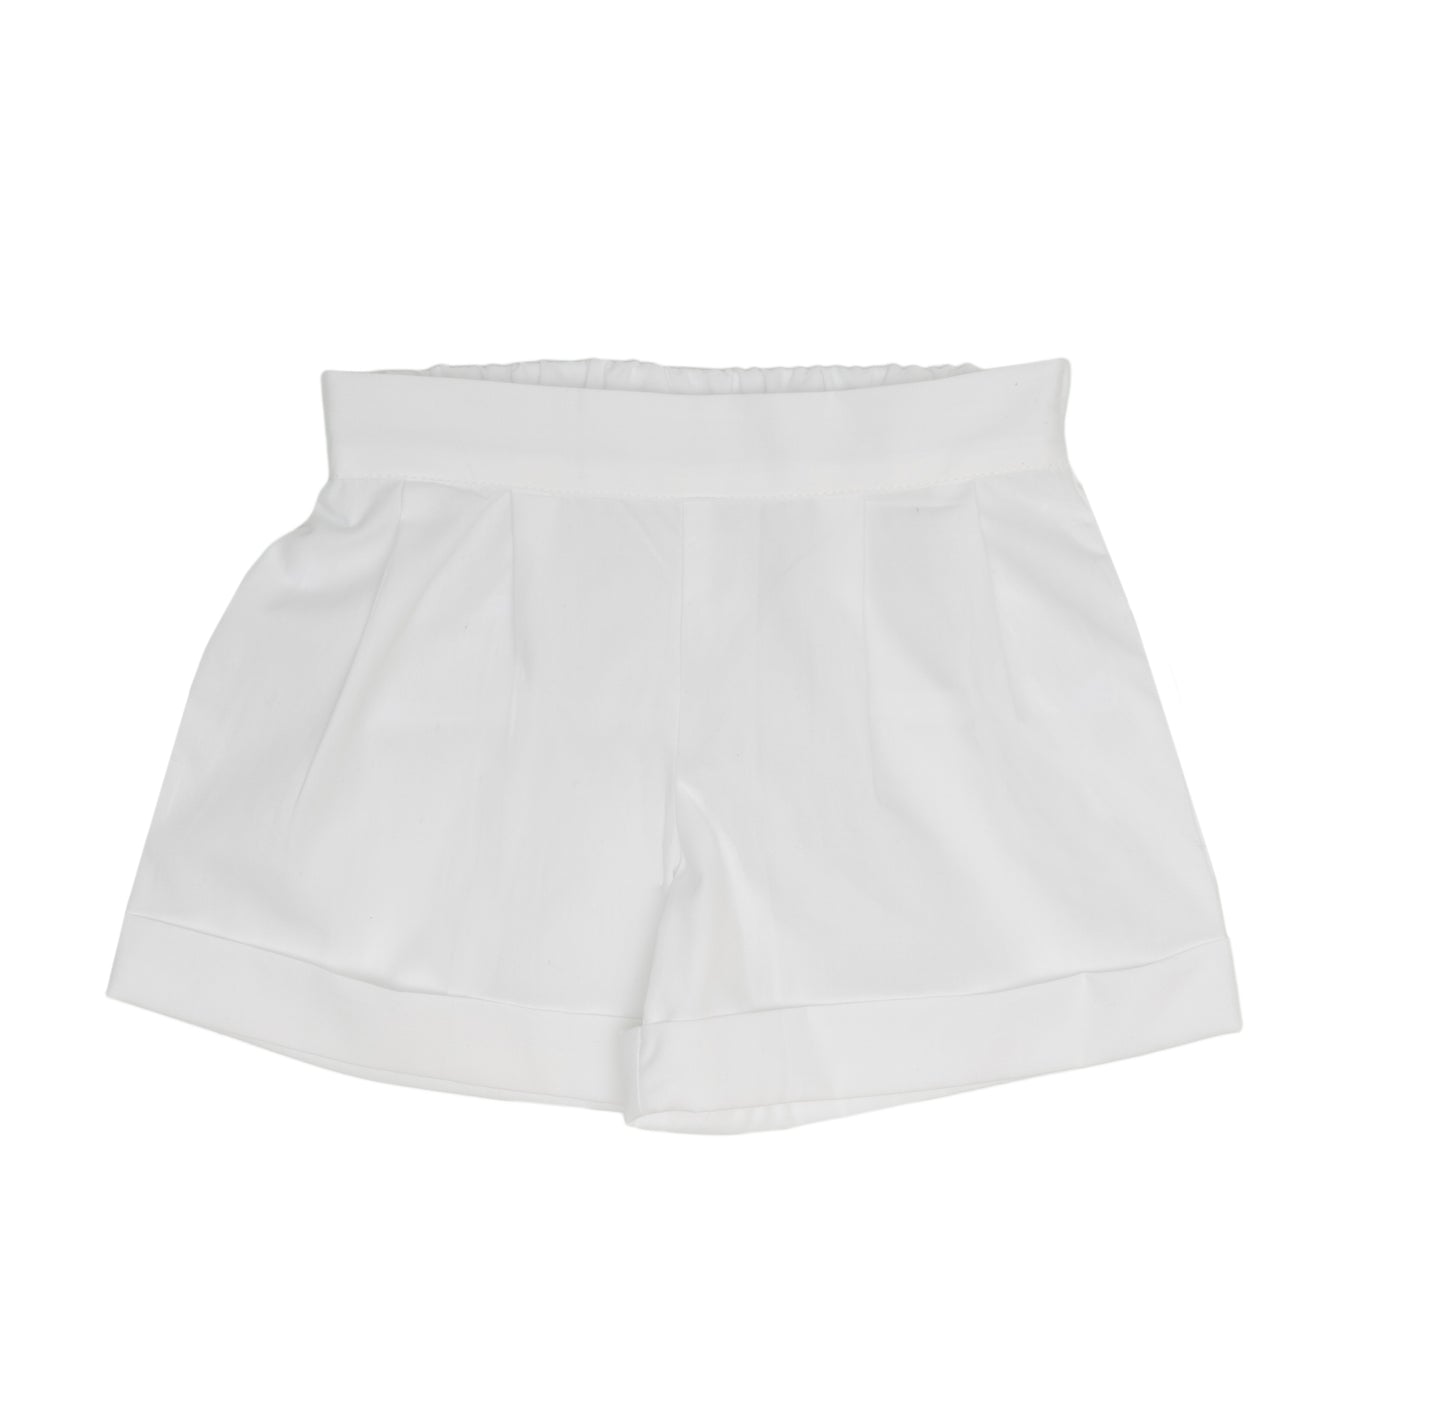 Bermuda Shorts – White